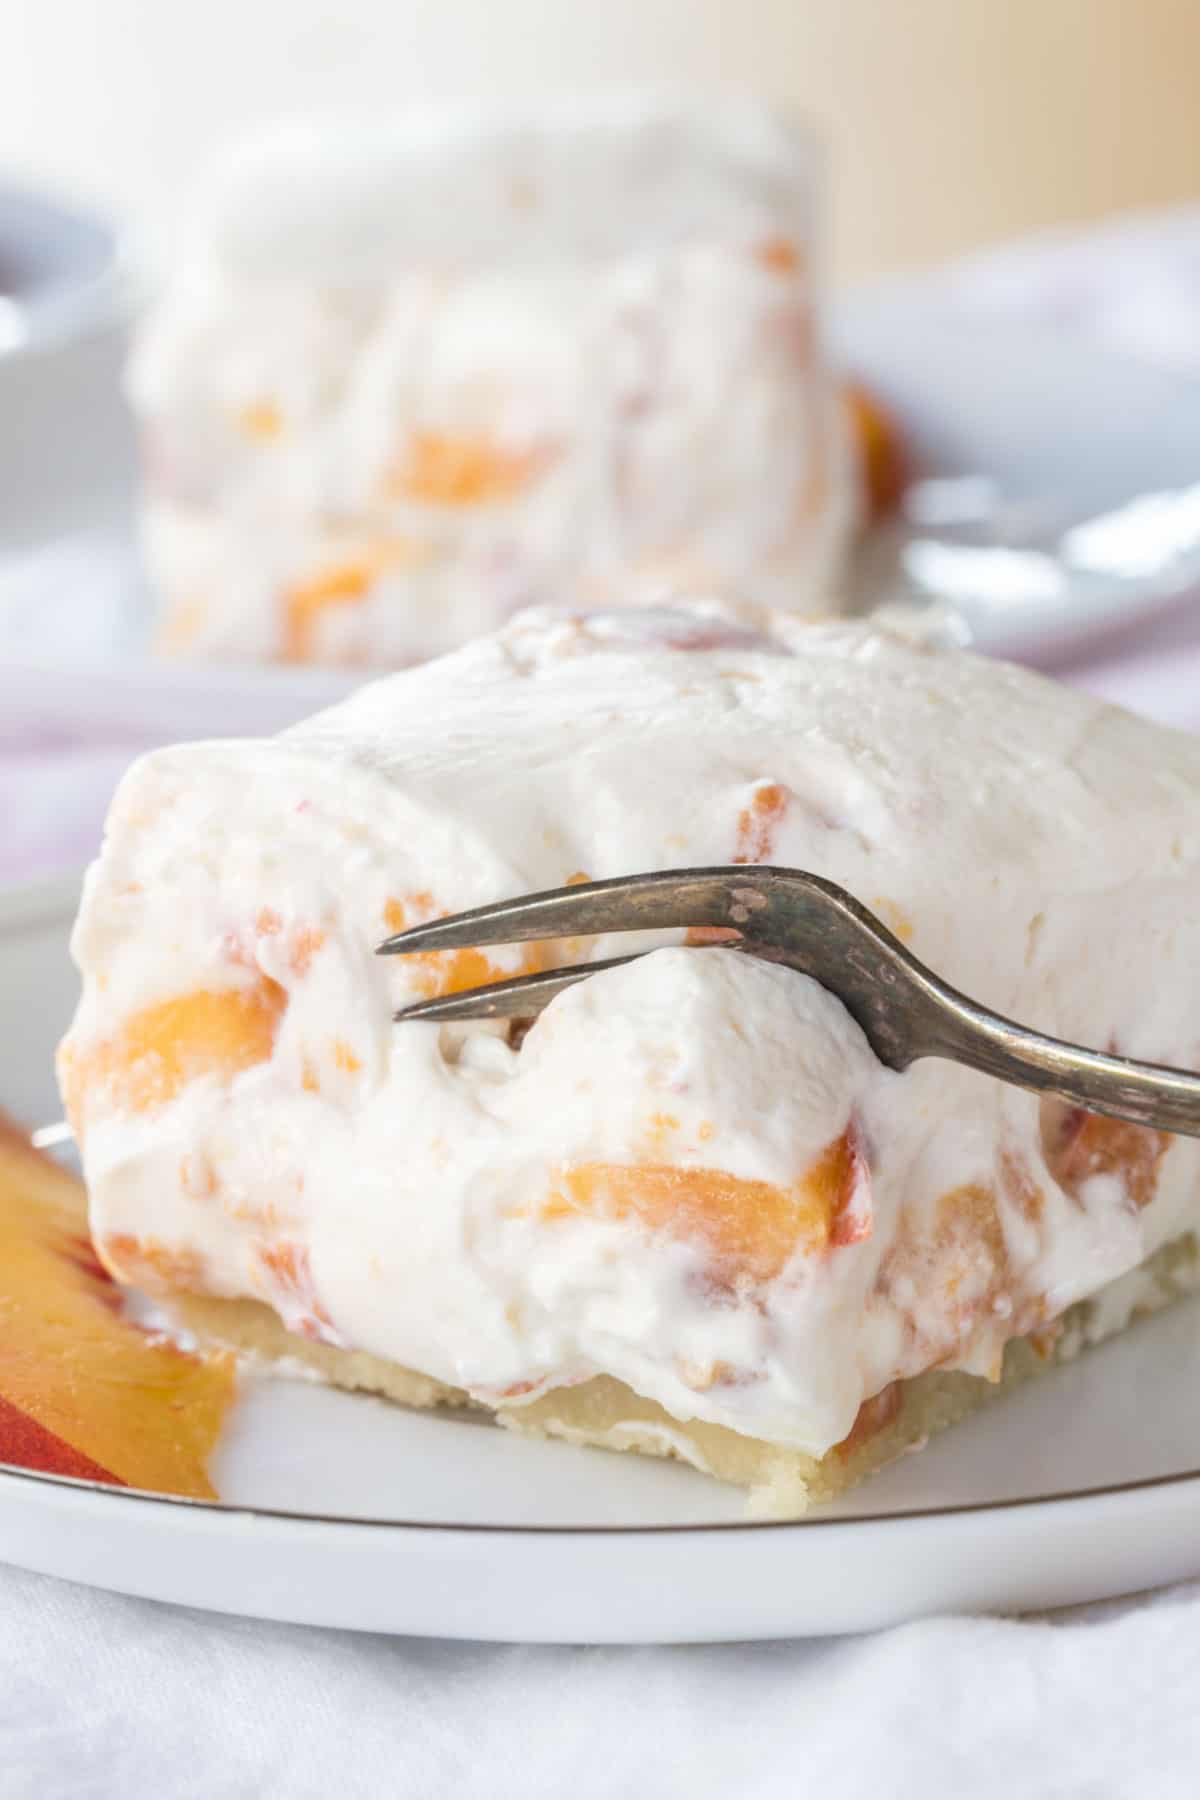 Cutting into a fluffy No Bake Gluten Free Peach Cheesecake Bar with a dessert fork